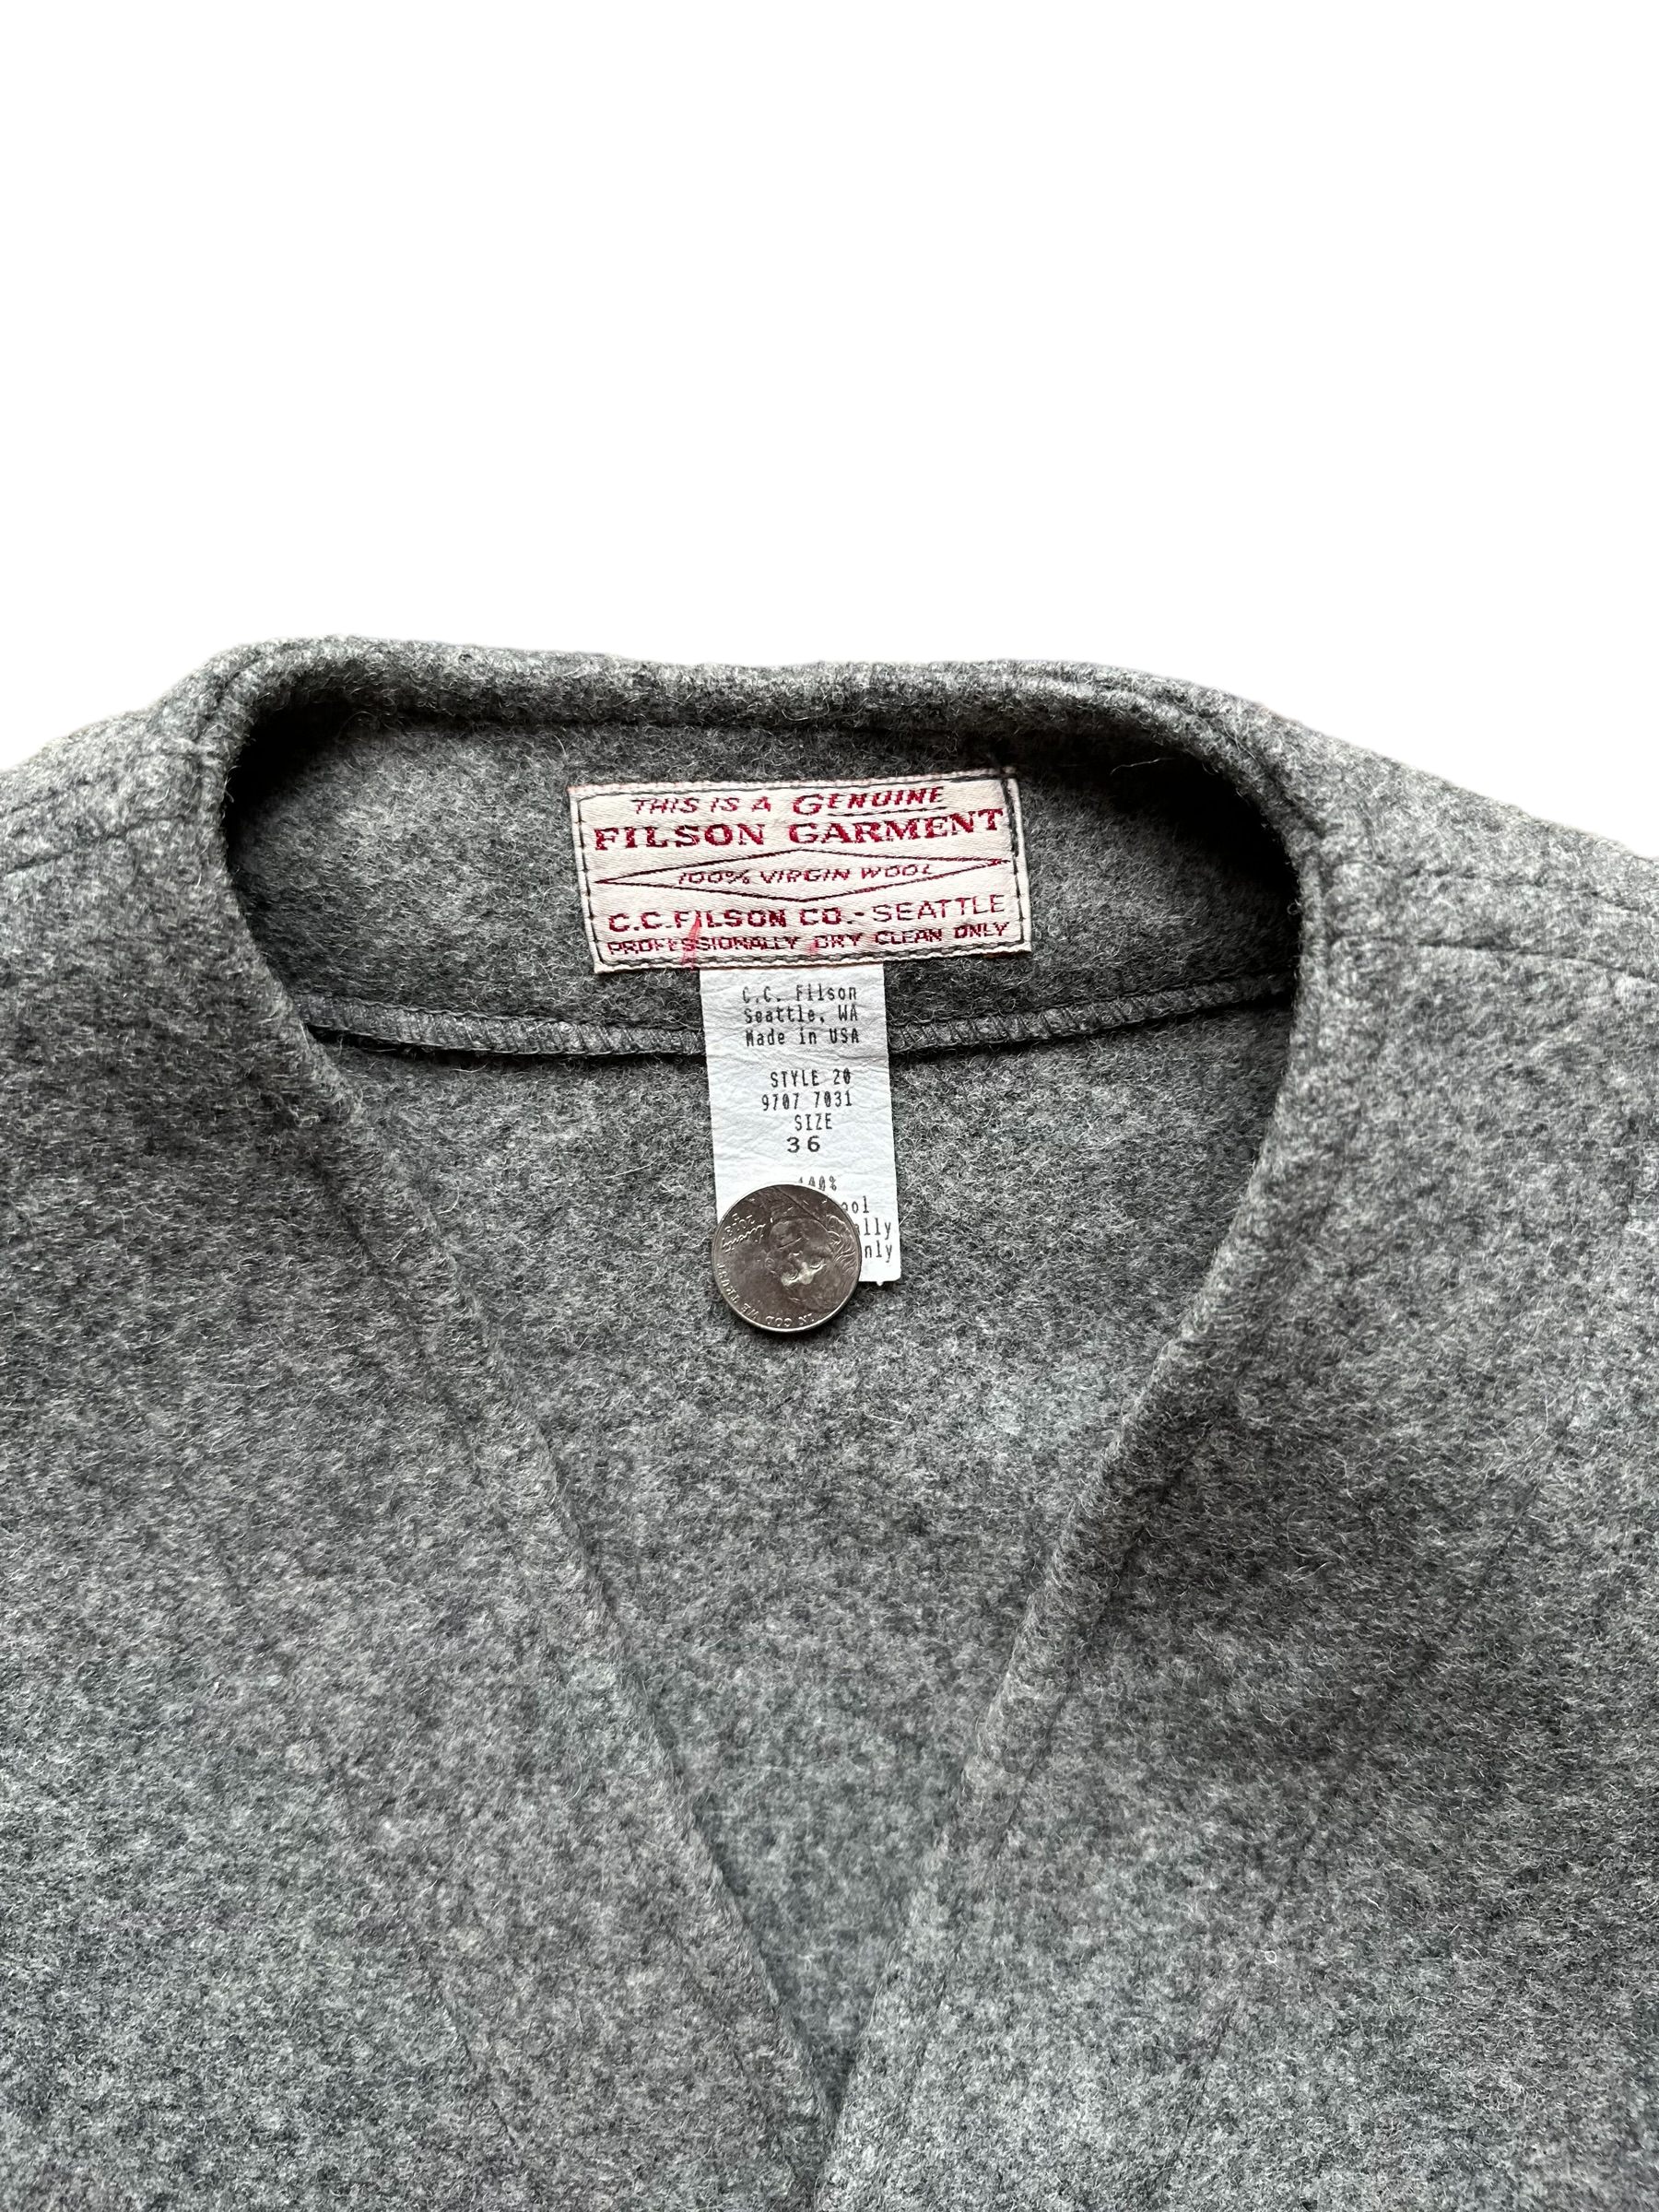 Tag View of Vintage Filson Mackinaw Vest SZ 36 |  Grey Wool Vest | Seattle Vintage Workwear